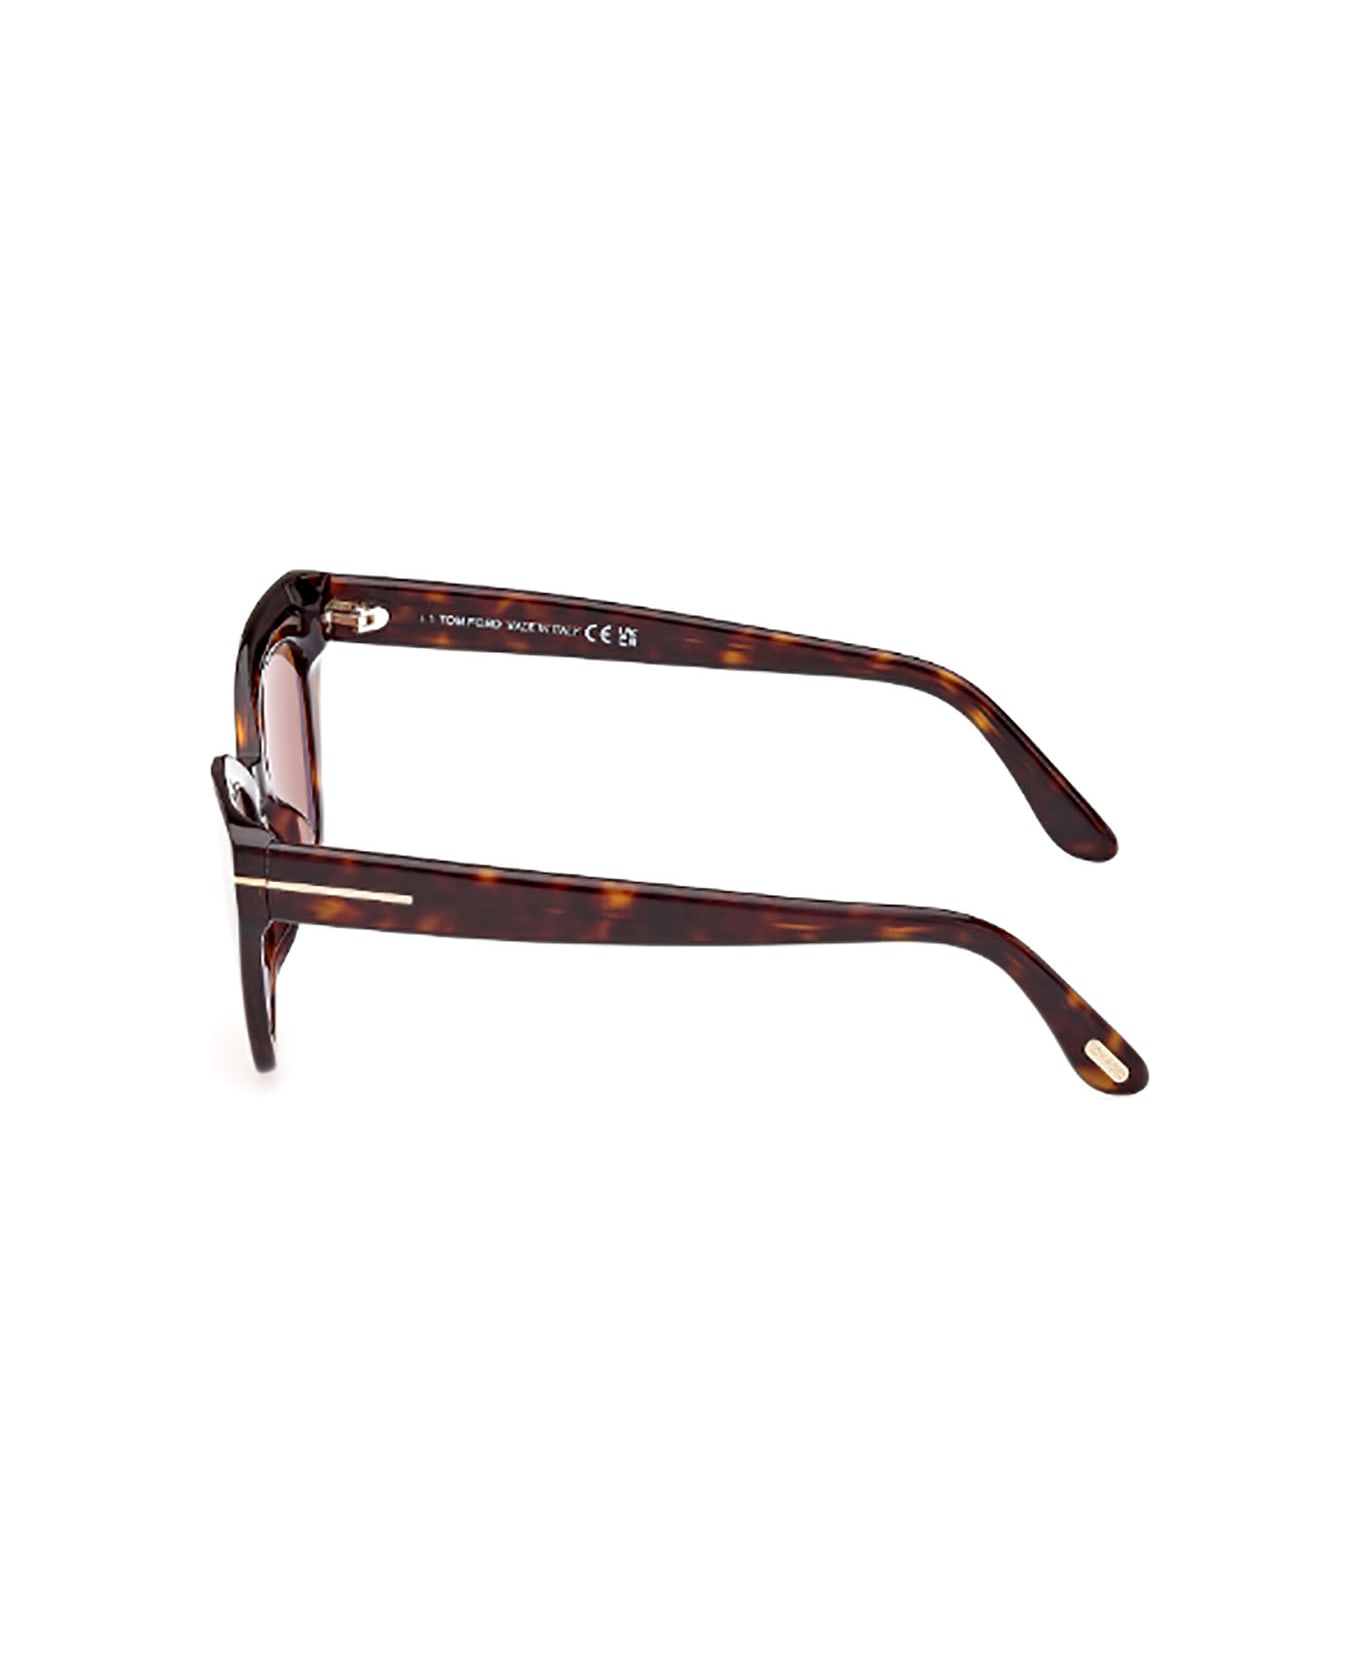 Tom Ford Eyewear FT1031 Sunglasses - E